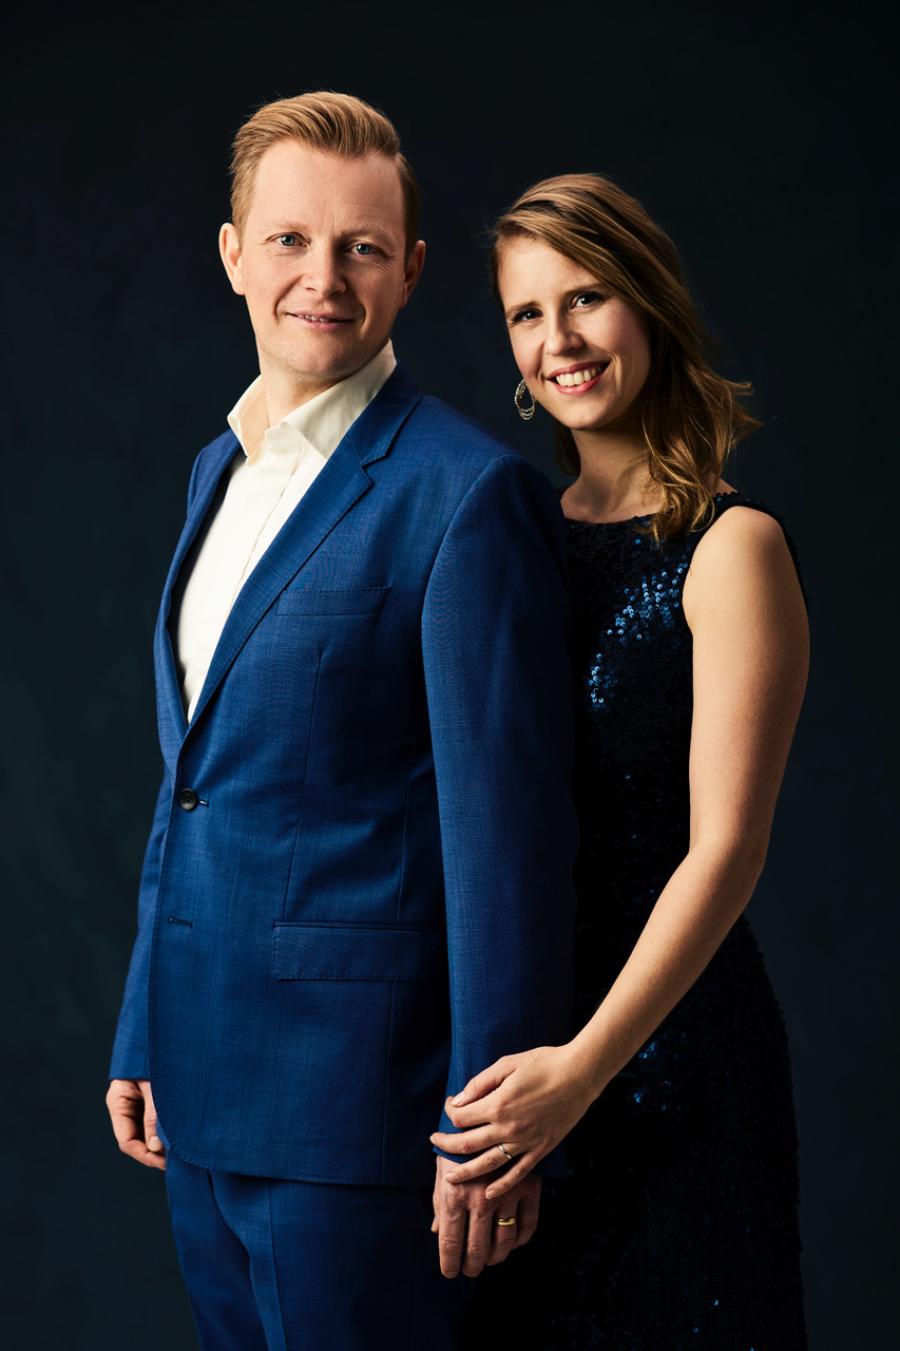 Solisterne Mette-Maria Øyen og Thomas Storm